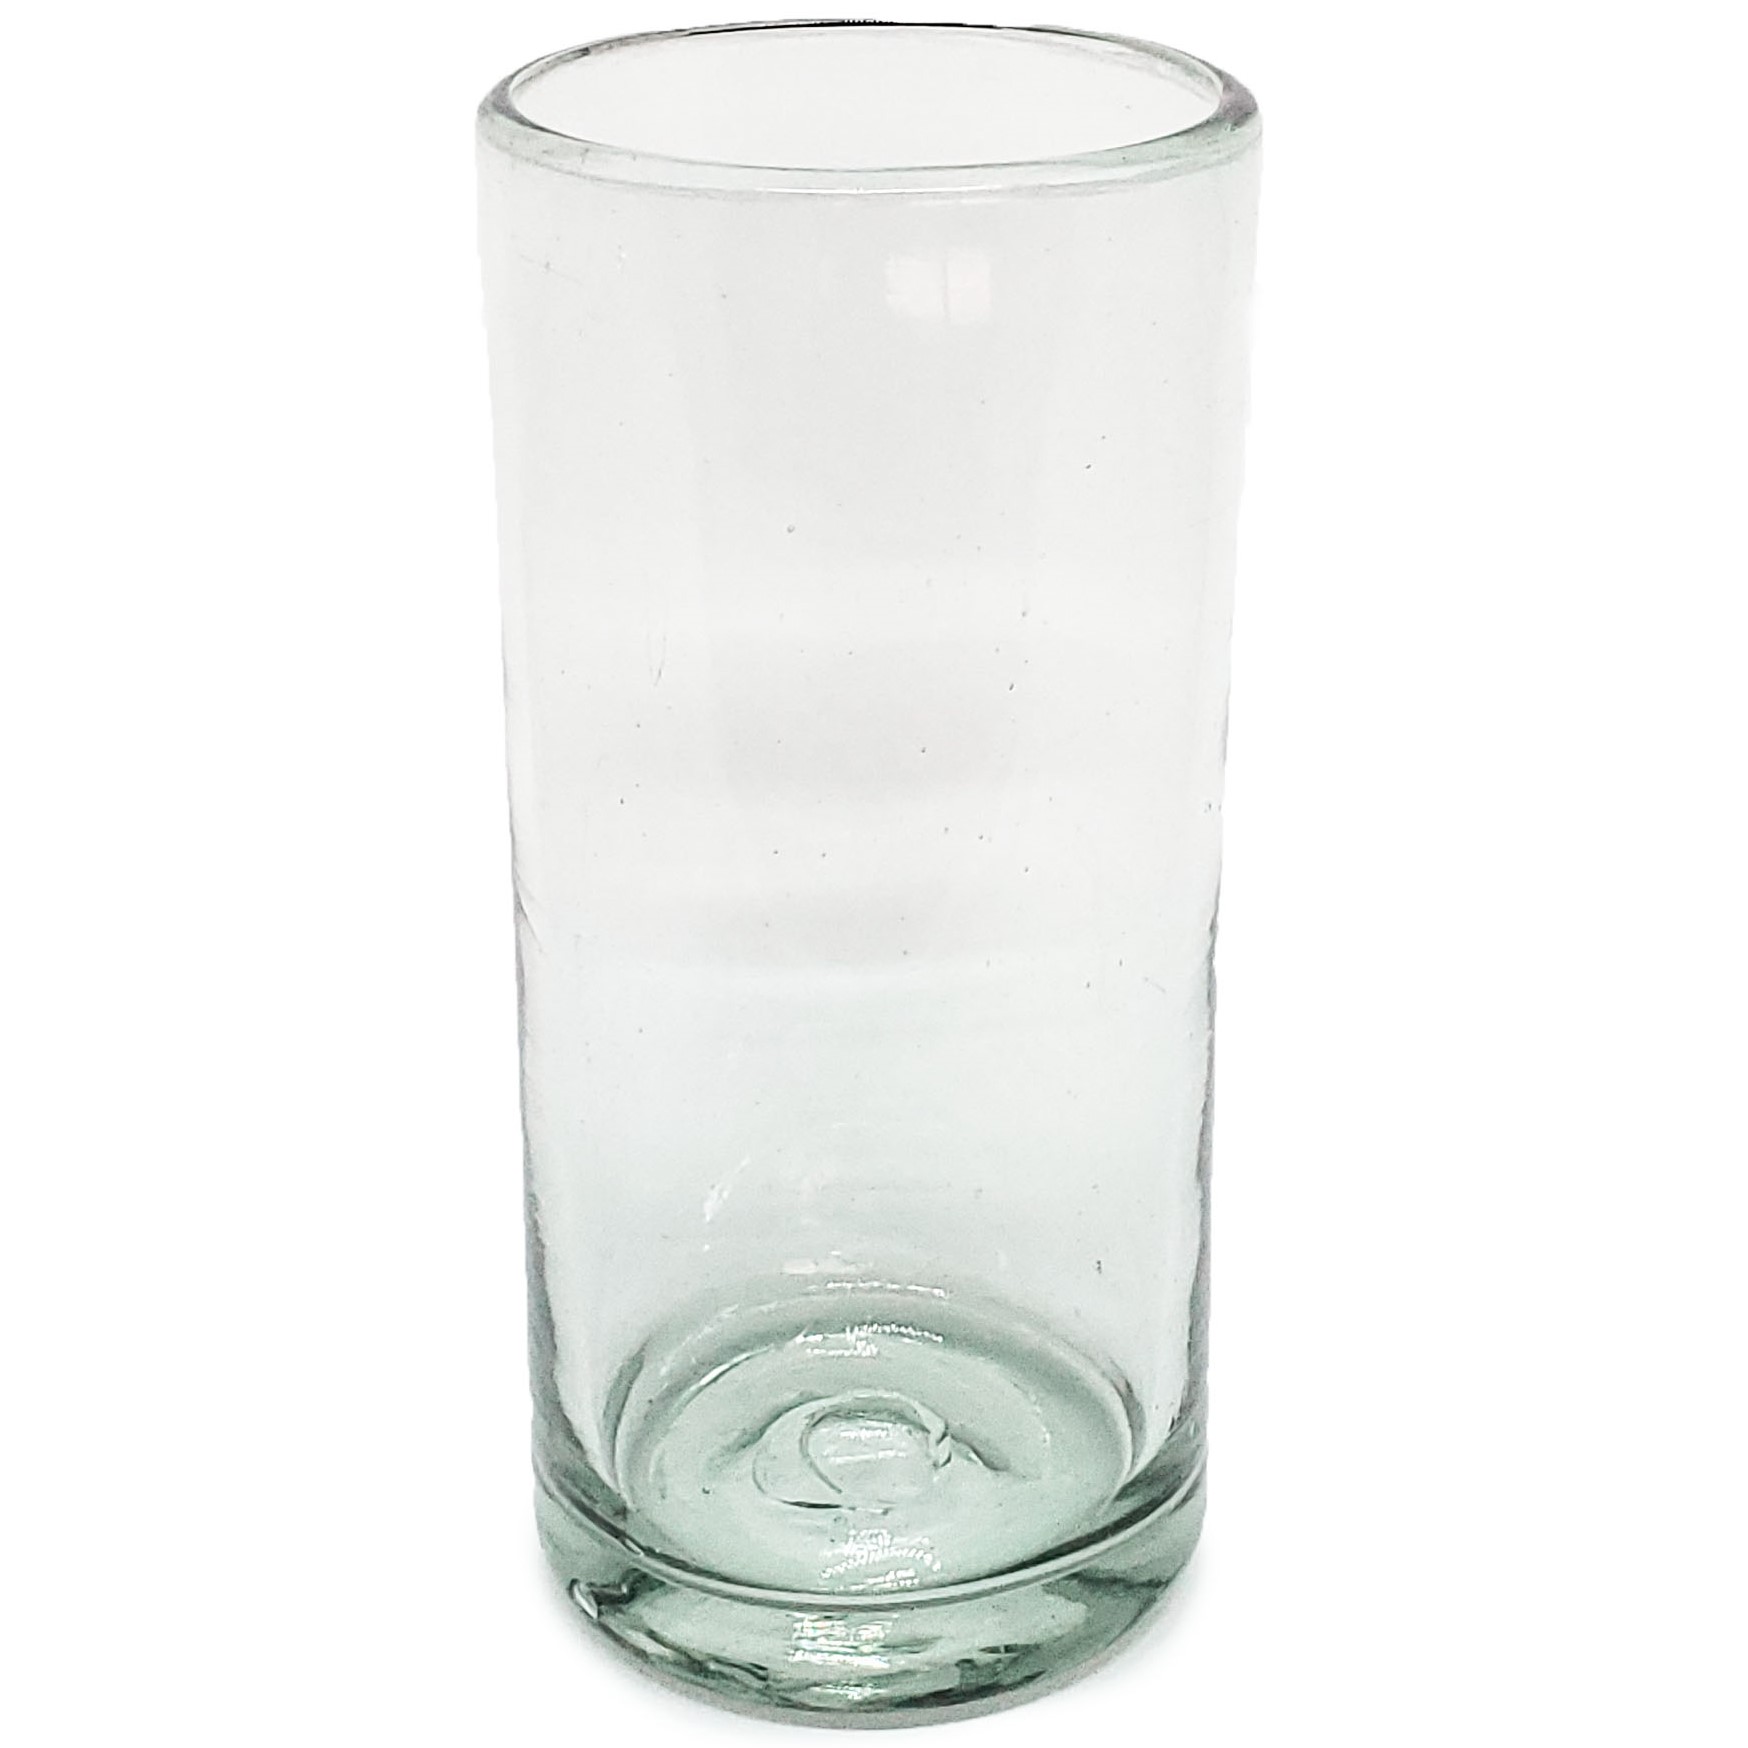 Clear 20 oz Tall Iced Tea Glasses (set of 6)